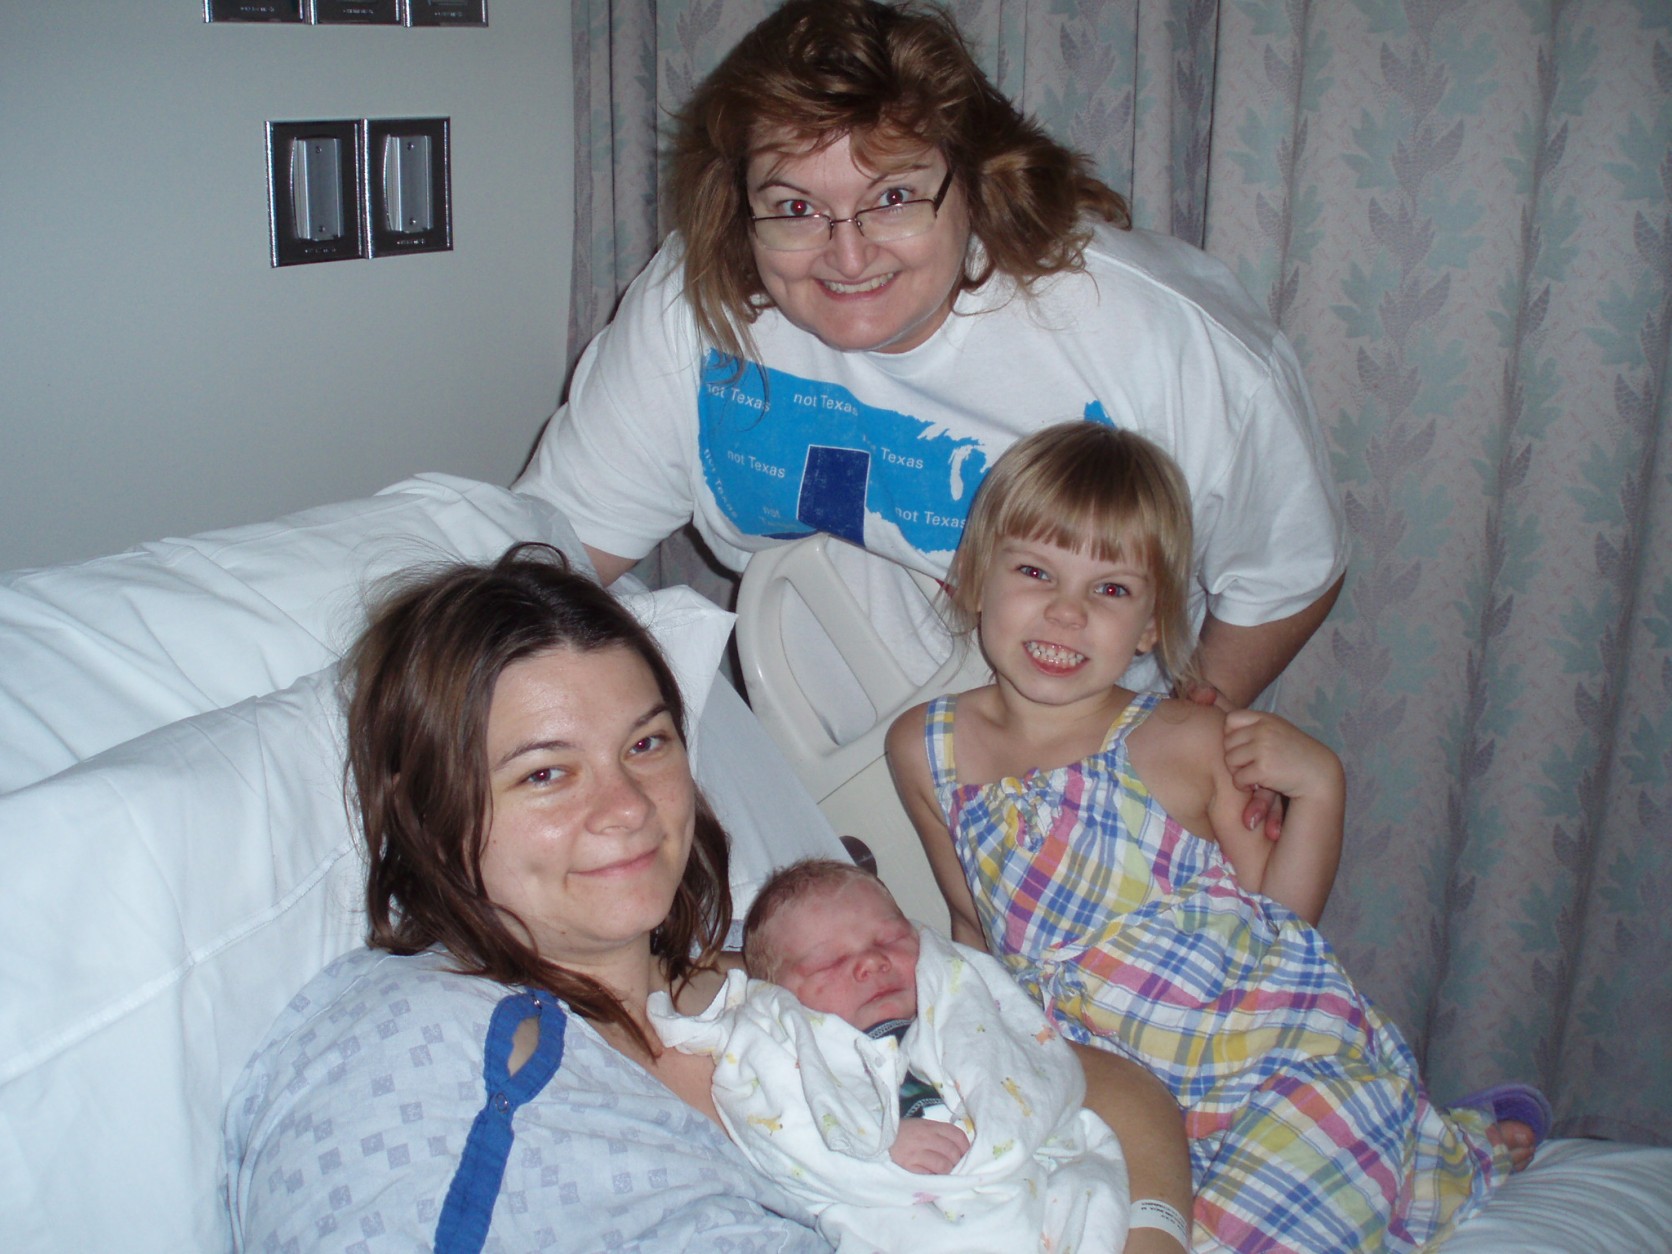 Heath with his Mom, Sister, and Grandma